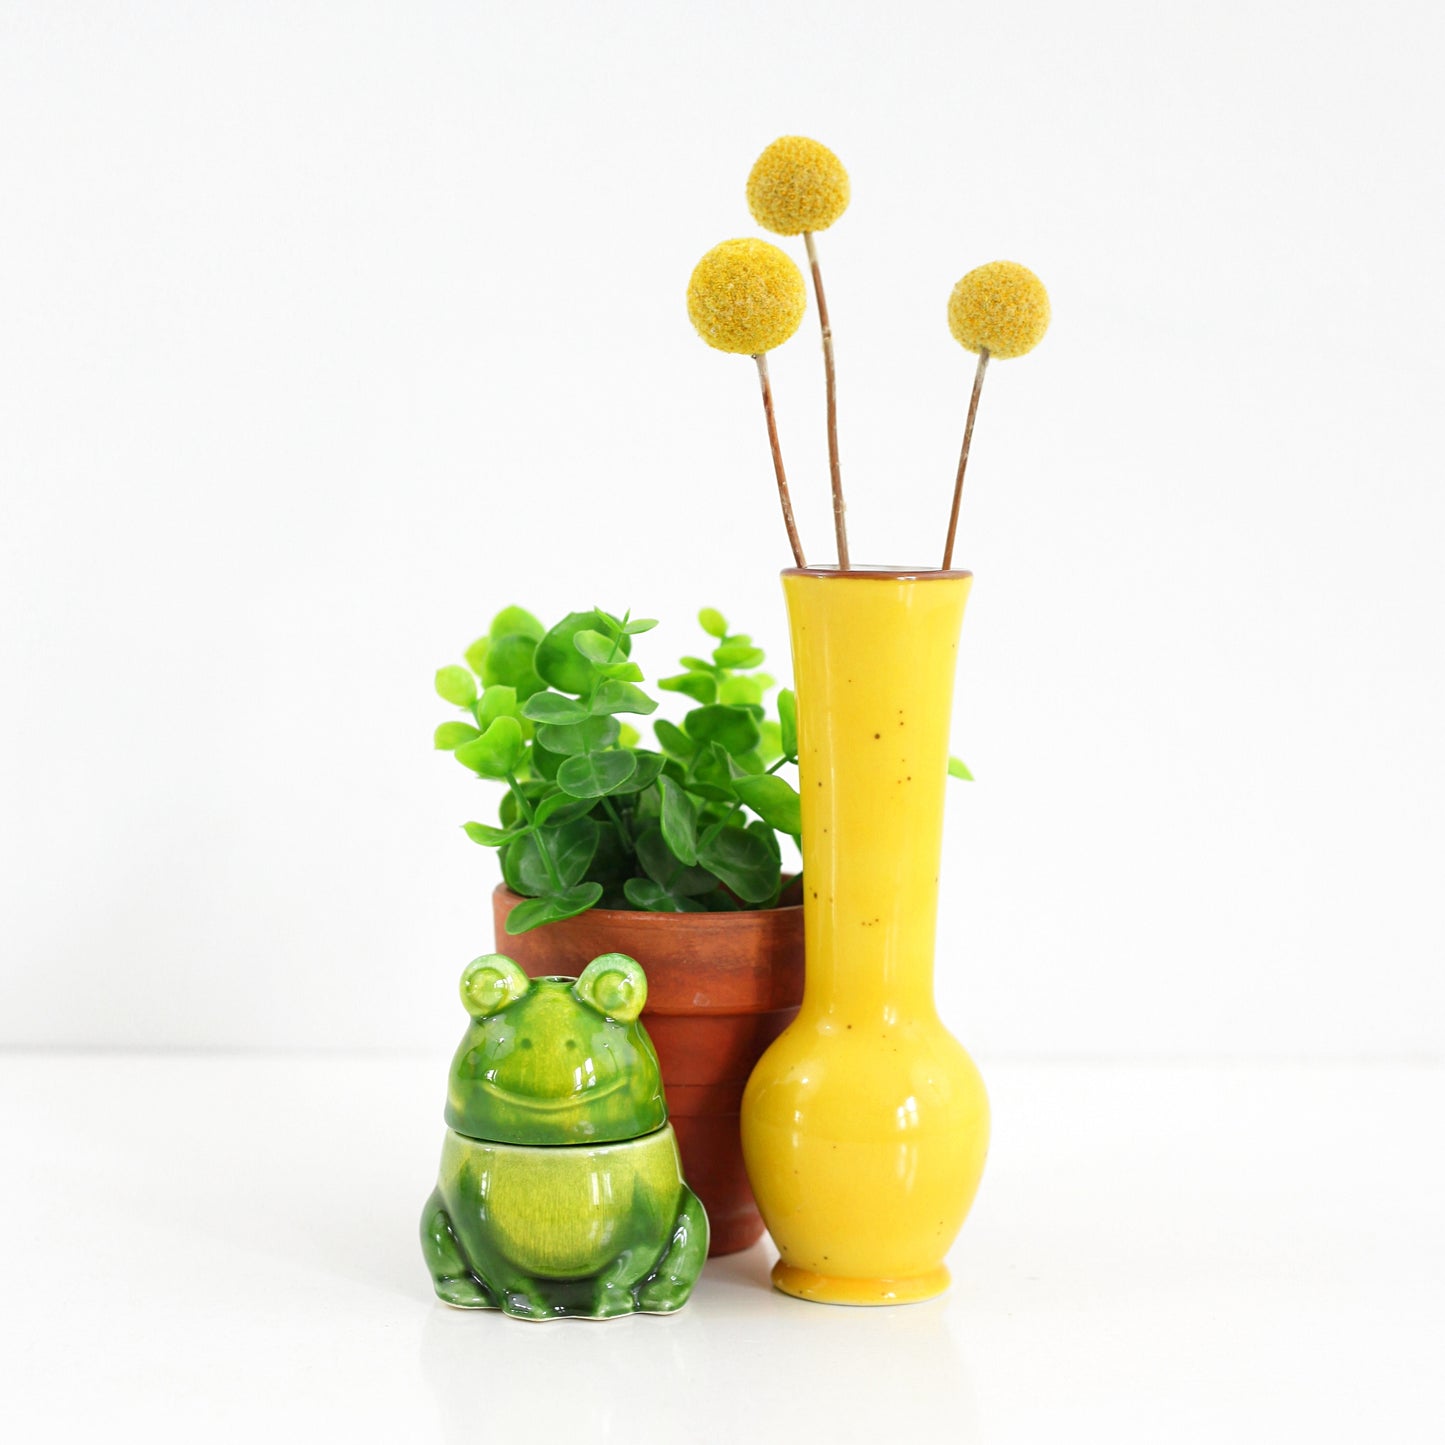 SOLD - Vintage Yellow Ceramic Vase